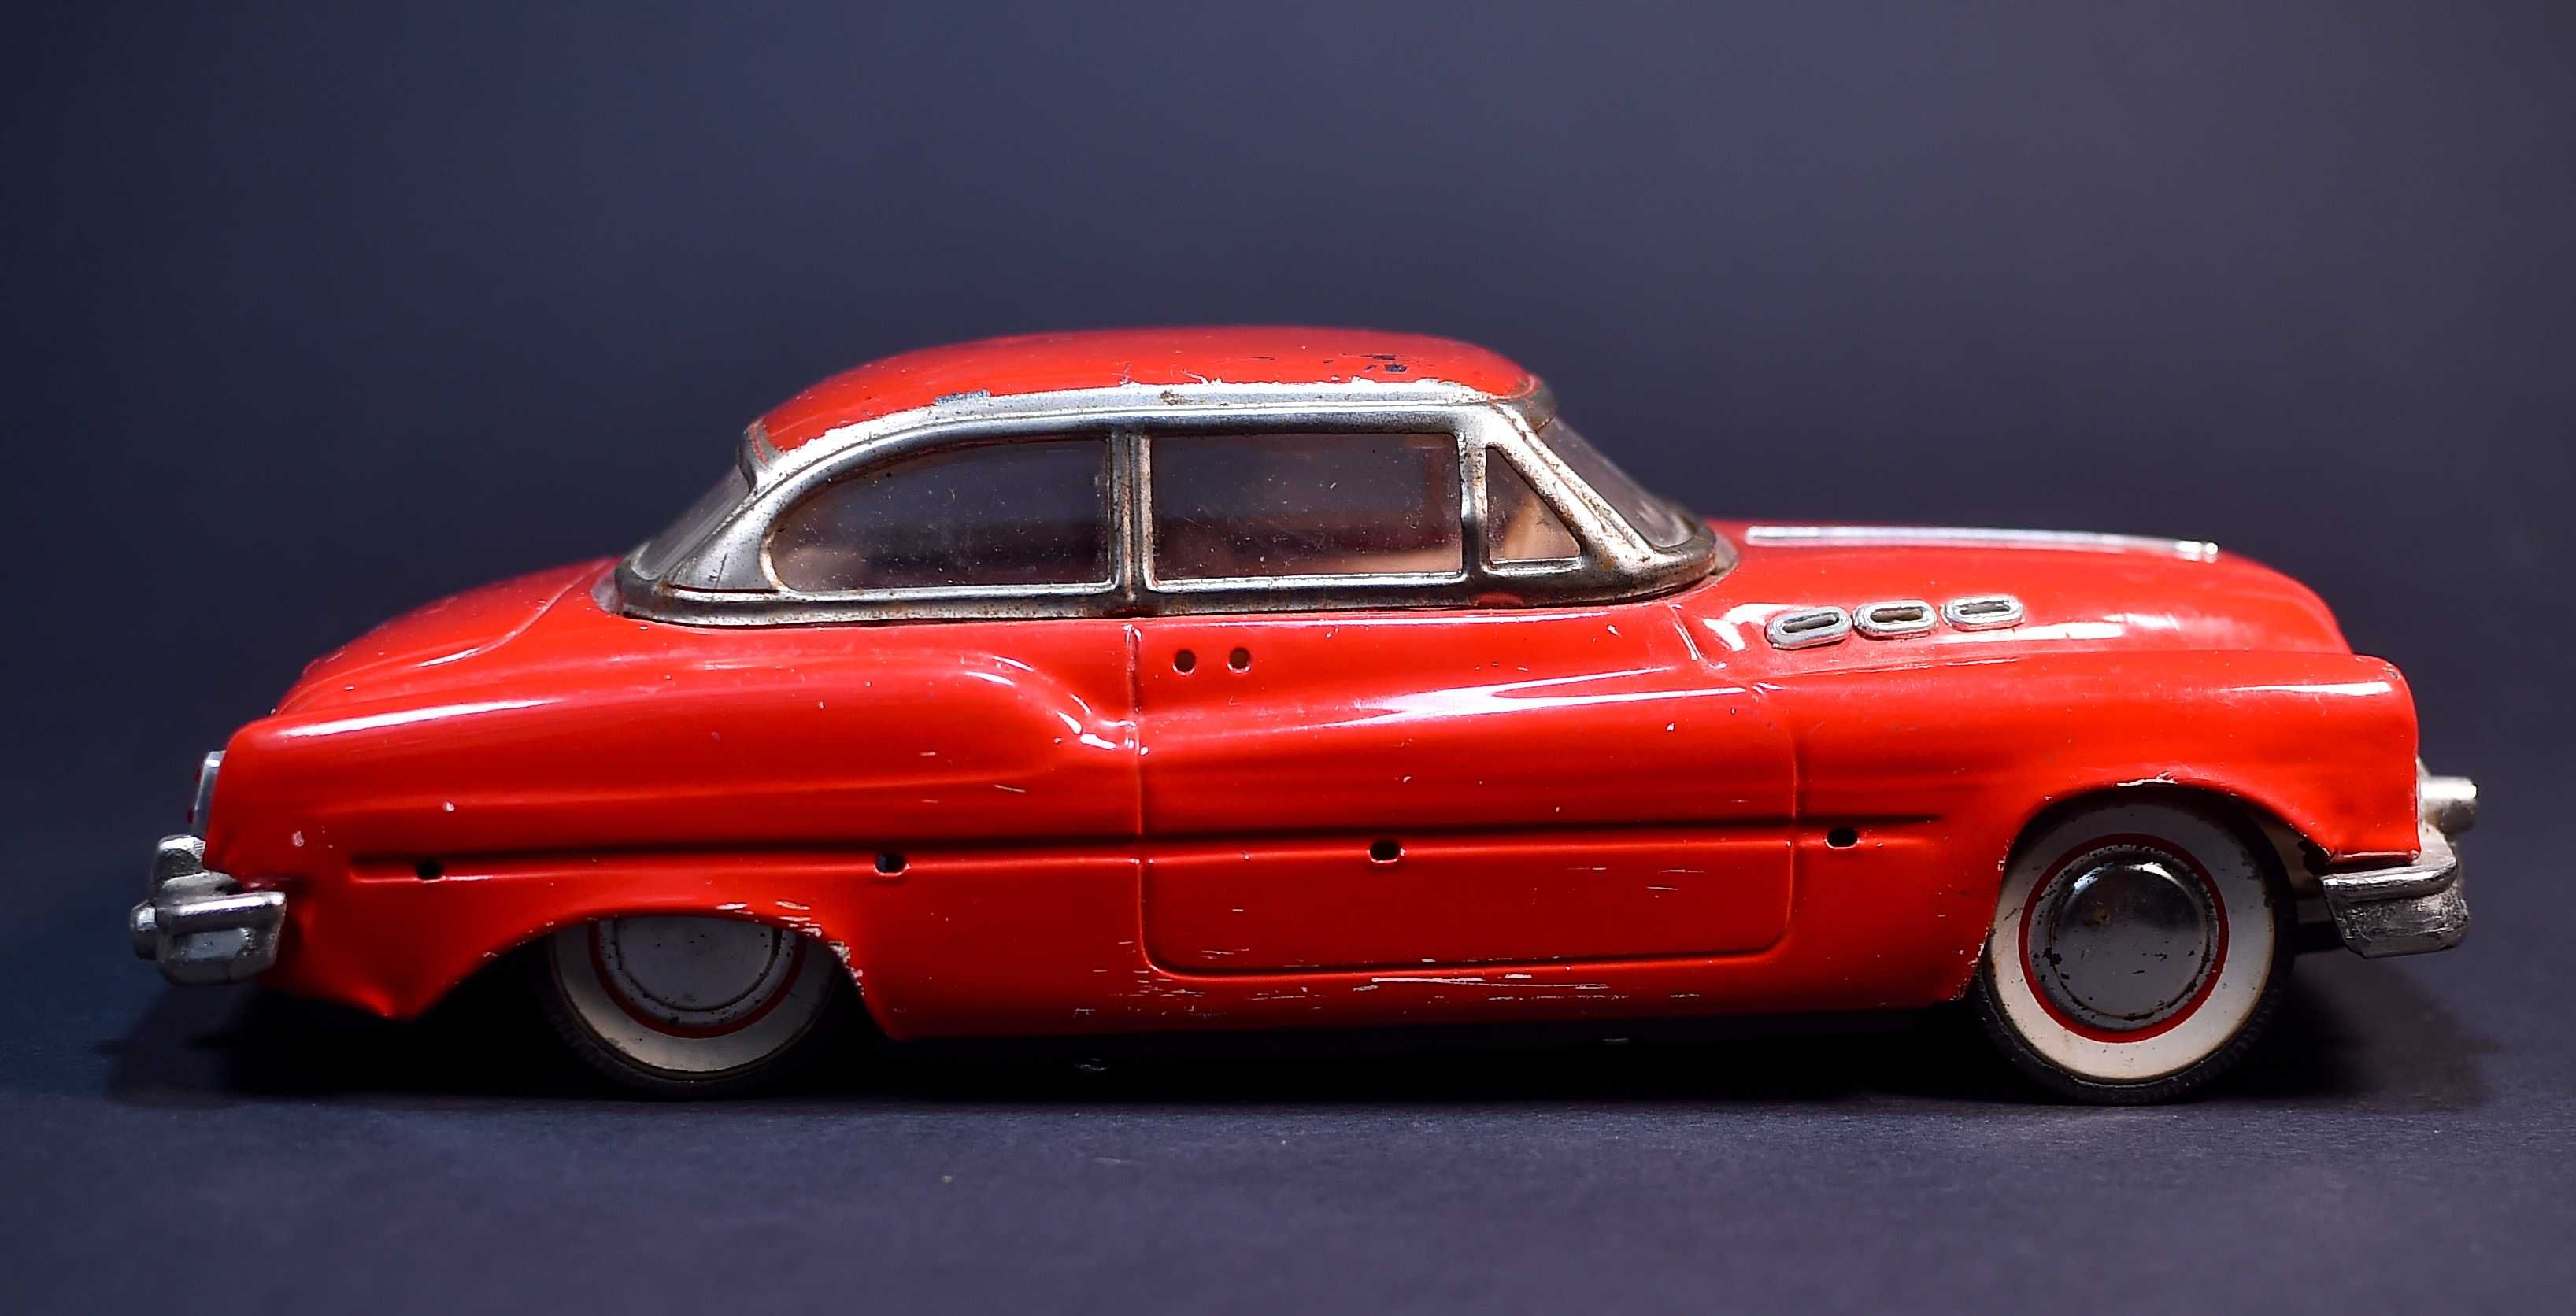 Stara Zabawka # Samochód Buick Seadan Metalowe 1950r. 1:18